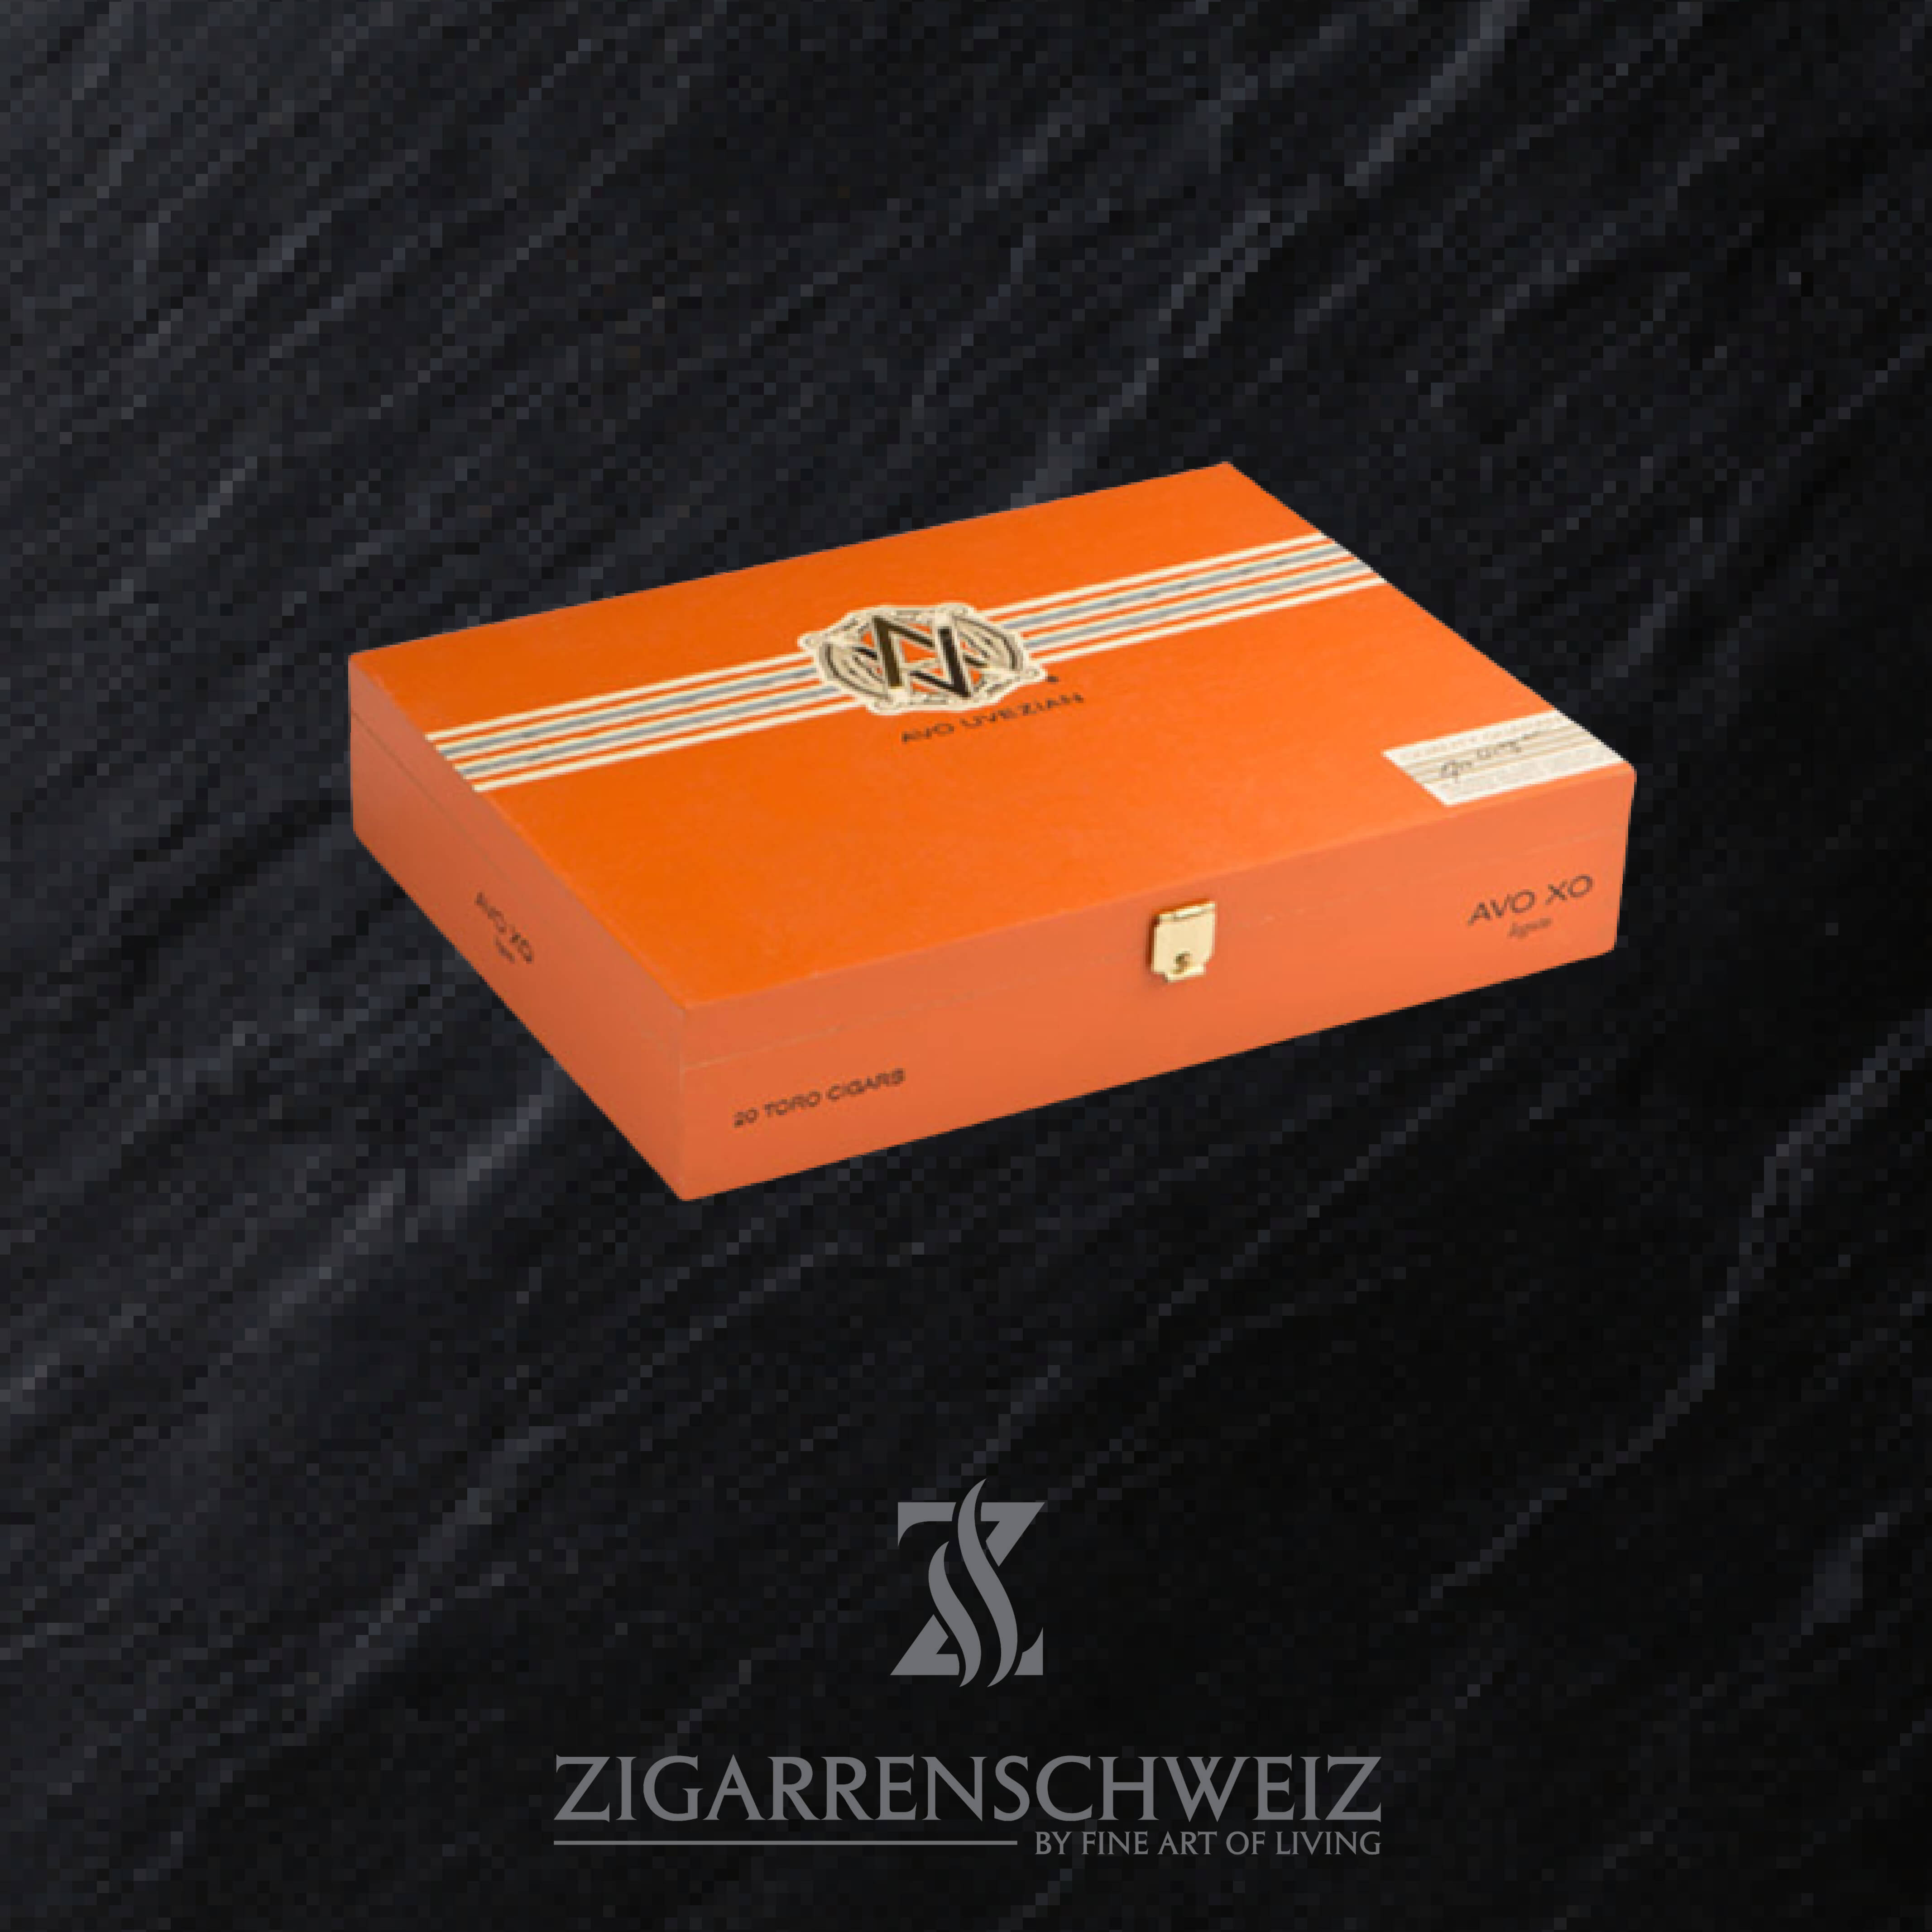 AVO XO Intermezzo Robusto Zigarren Kiste geschlossen